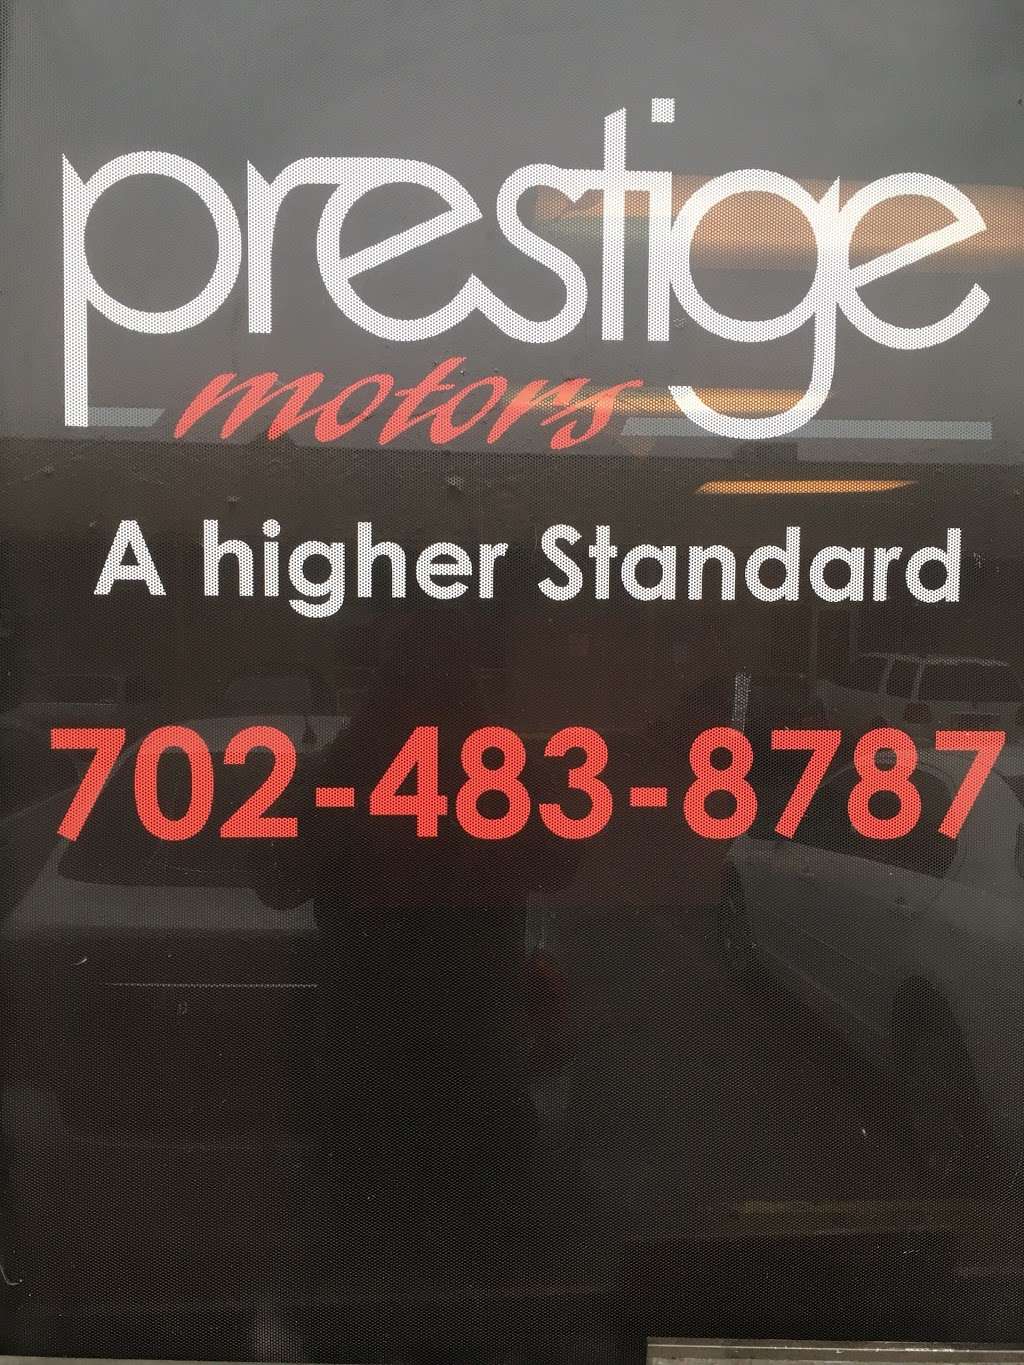 Prestige Car rentals (APEX) | 5115 Dean Martin Dr #408, Las Vegas, NV 89118, USA | Phone: (702) 703-4993